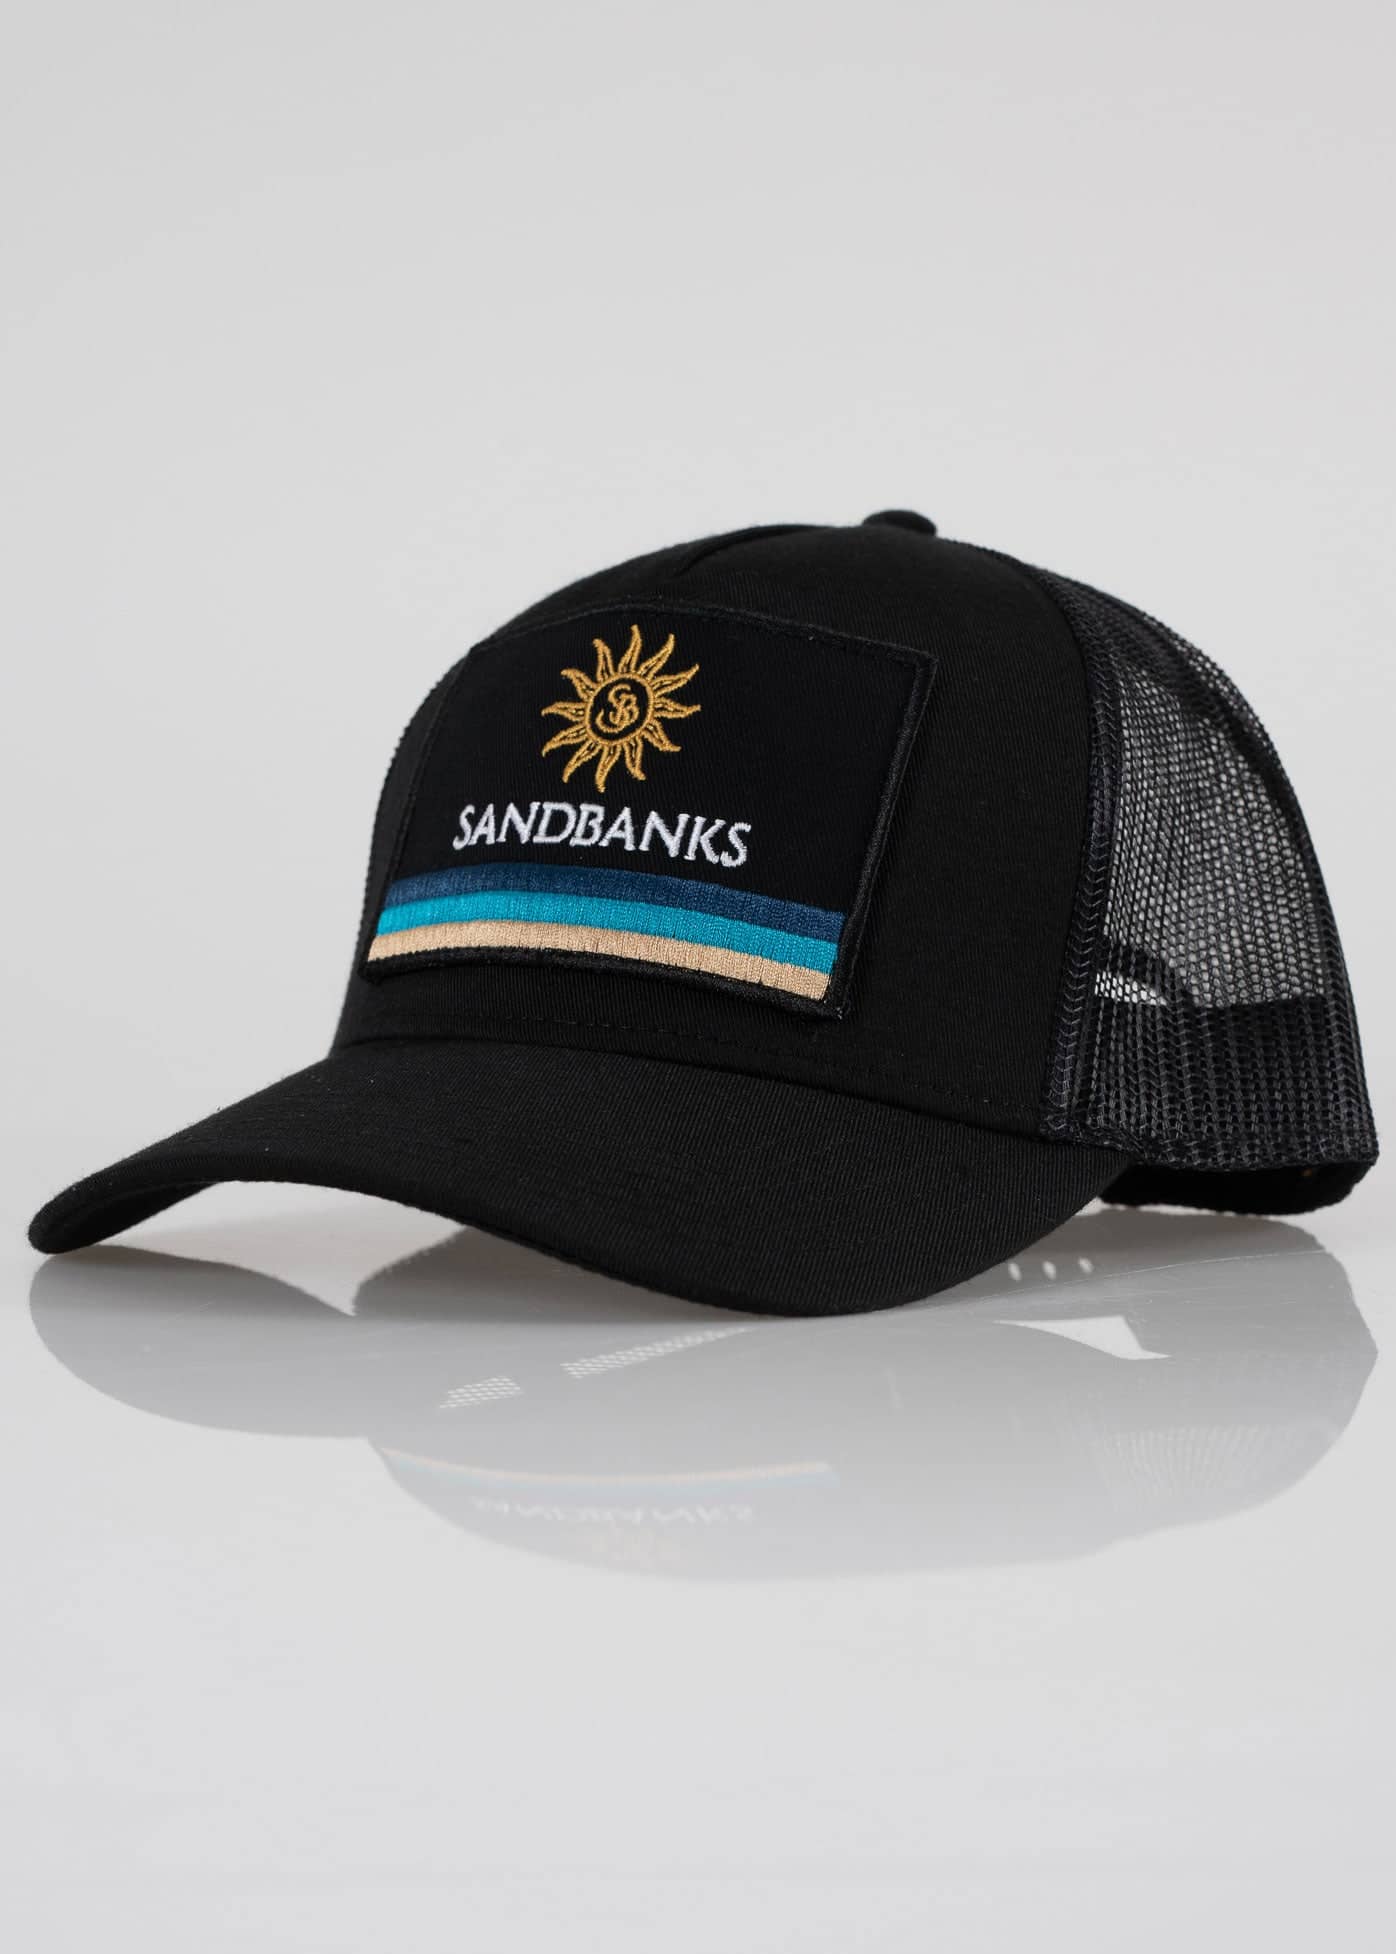 Sandbanks Mesh back cap - sandbanksco.com